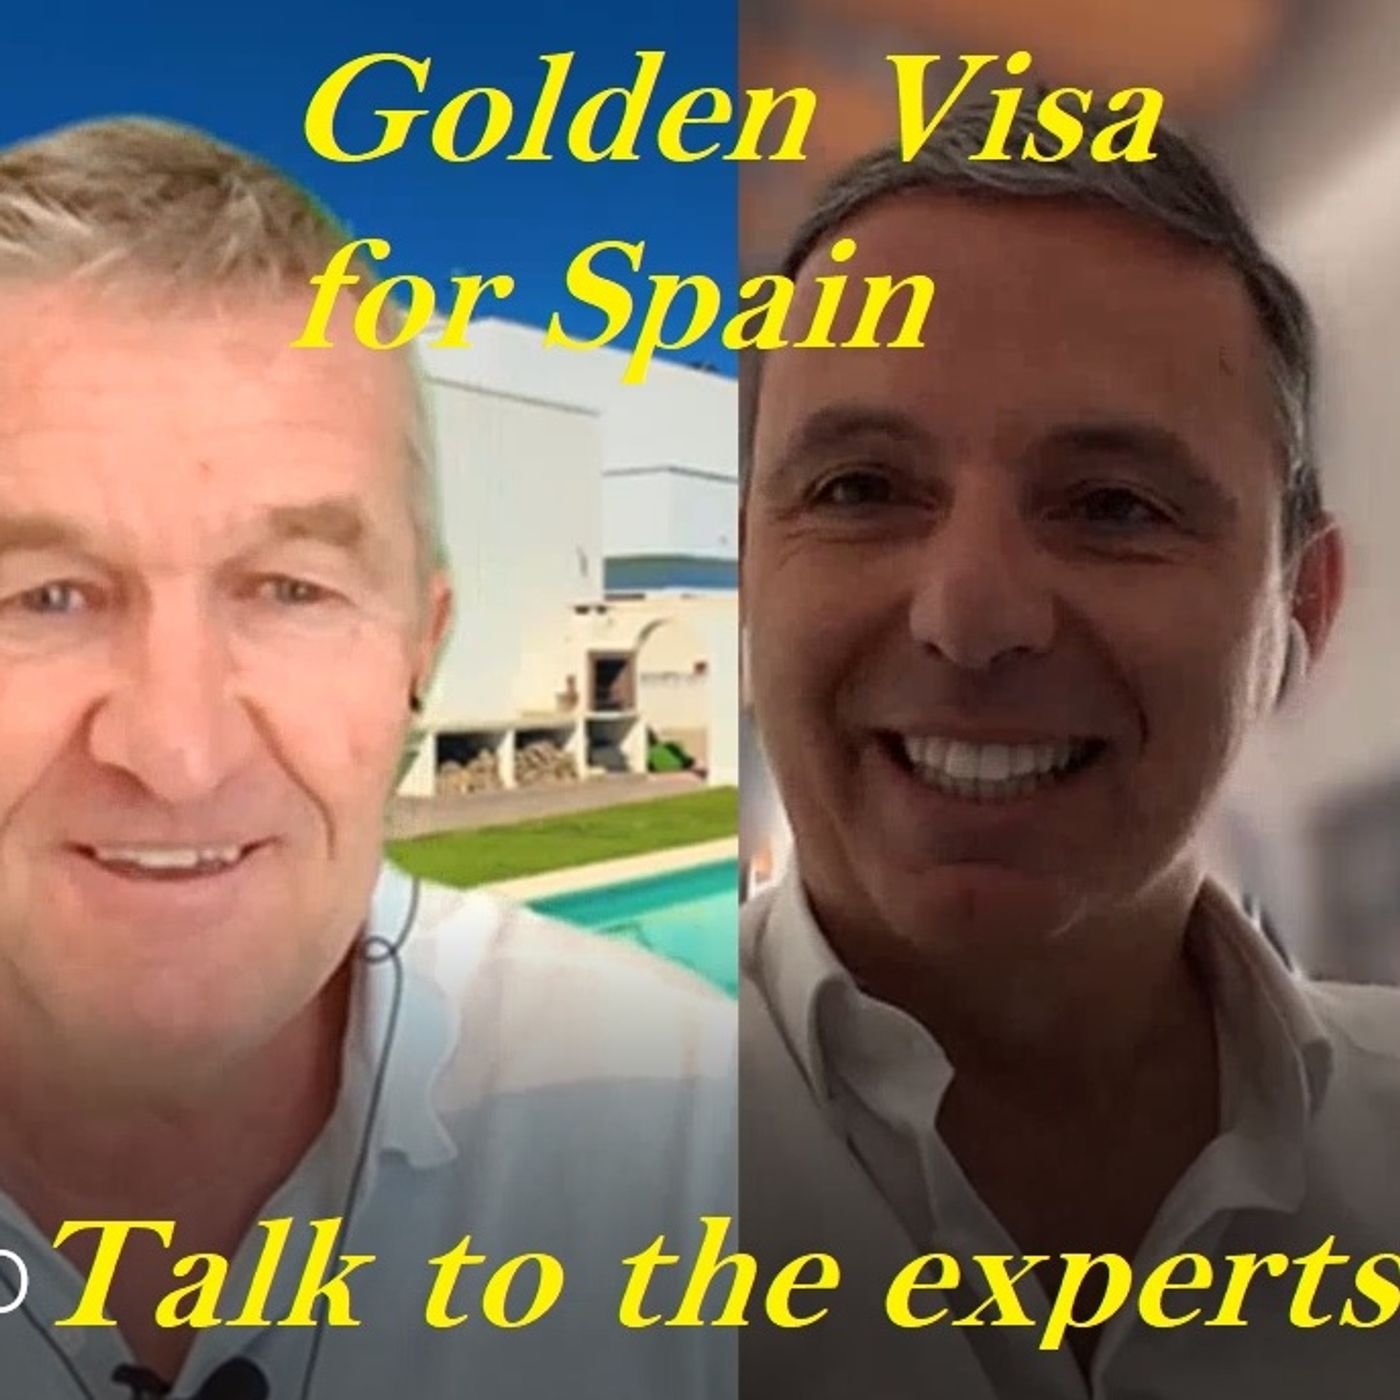 Golden visa for Spain information